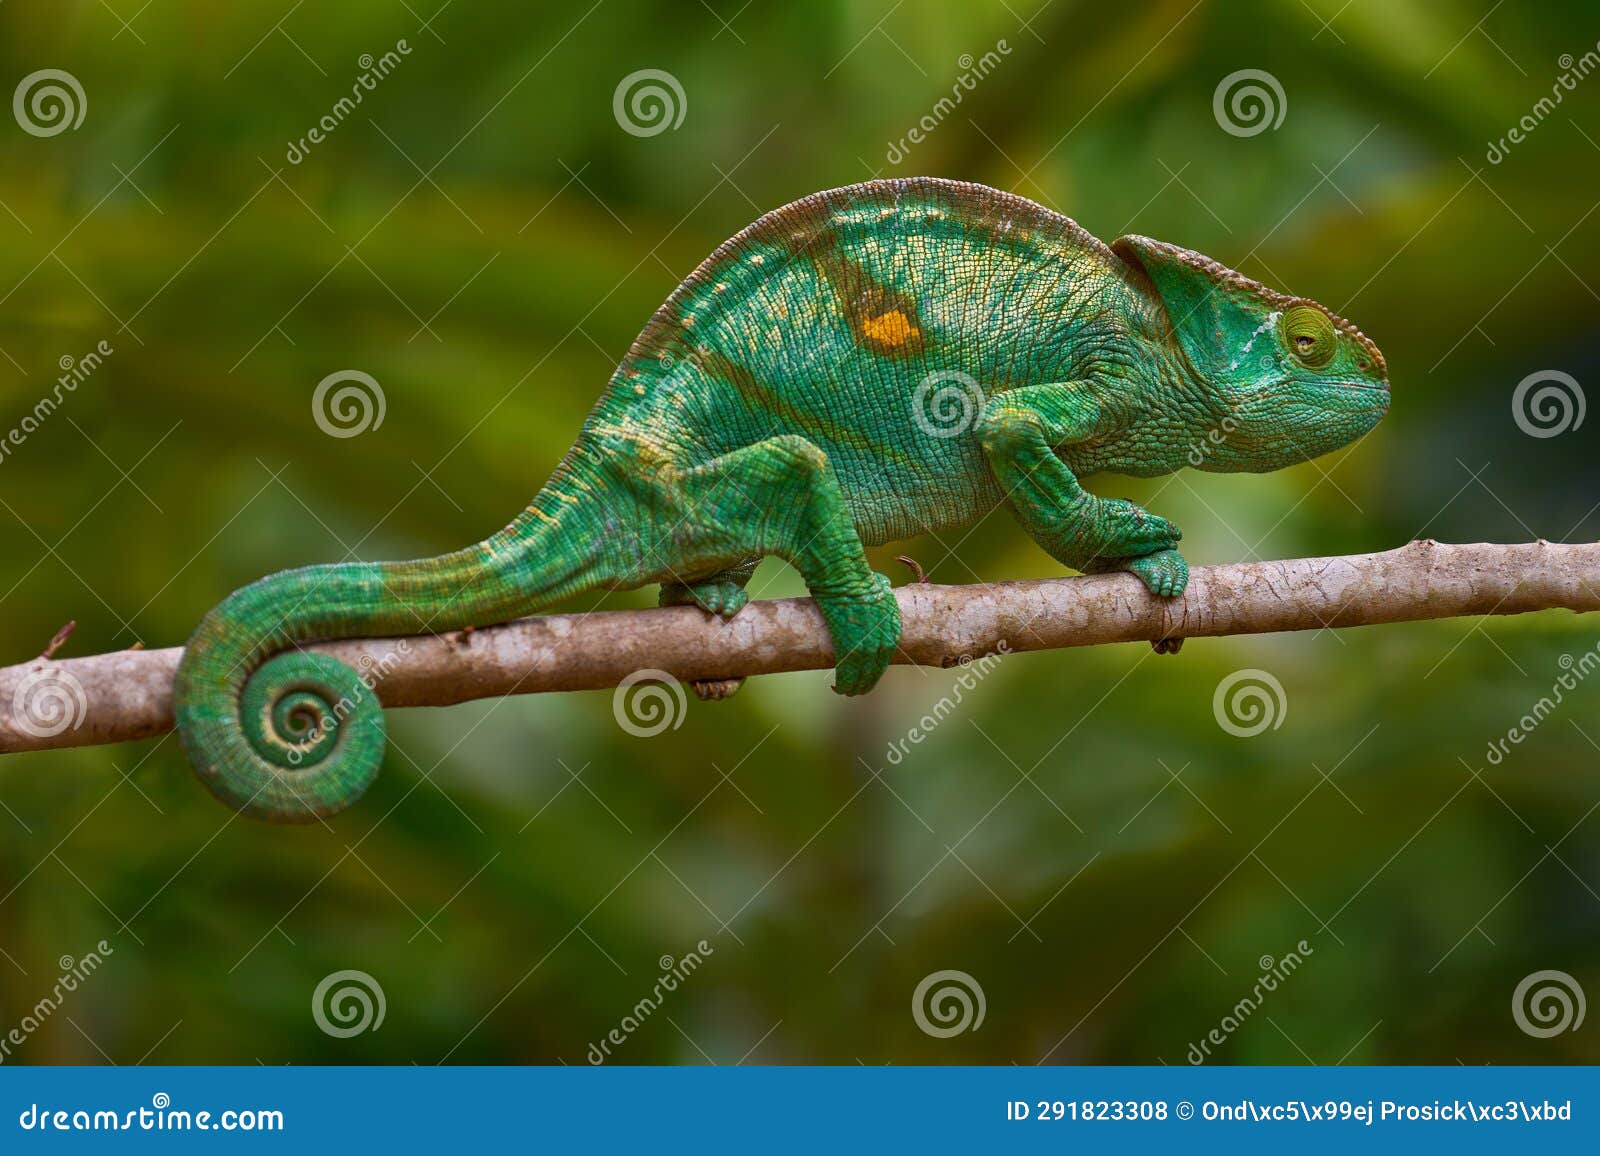 parson's chameleon, calumma parsonii, forest habitat. exotic beautifull endemic green reptile with long